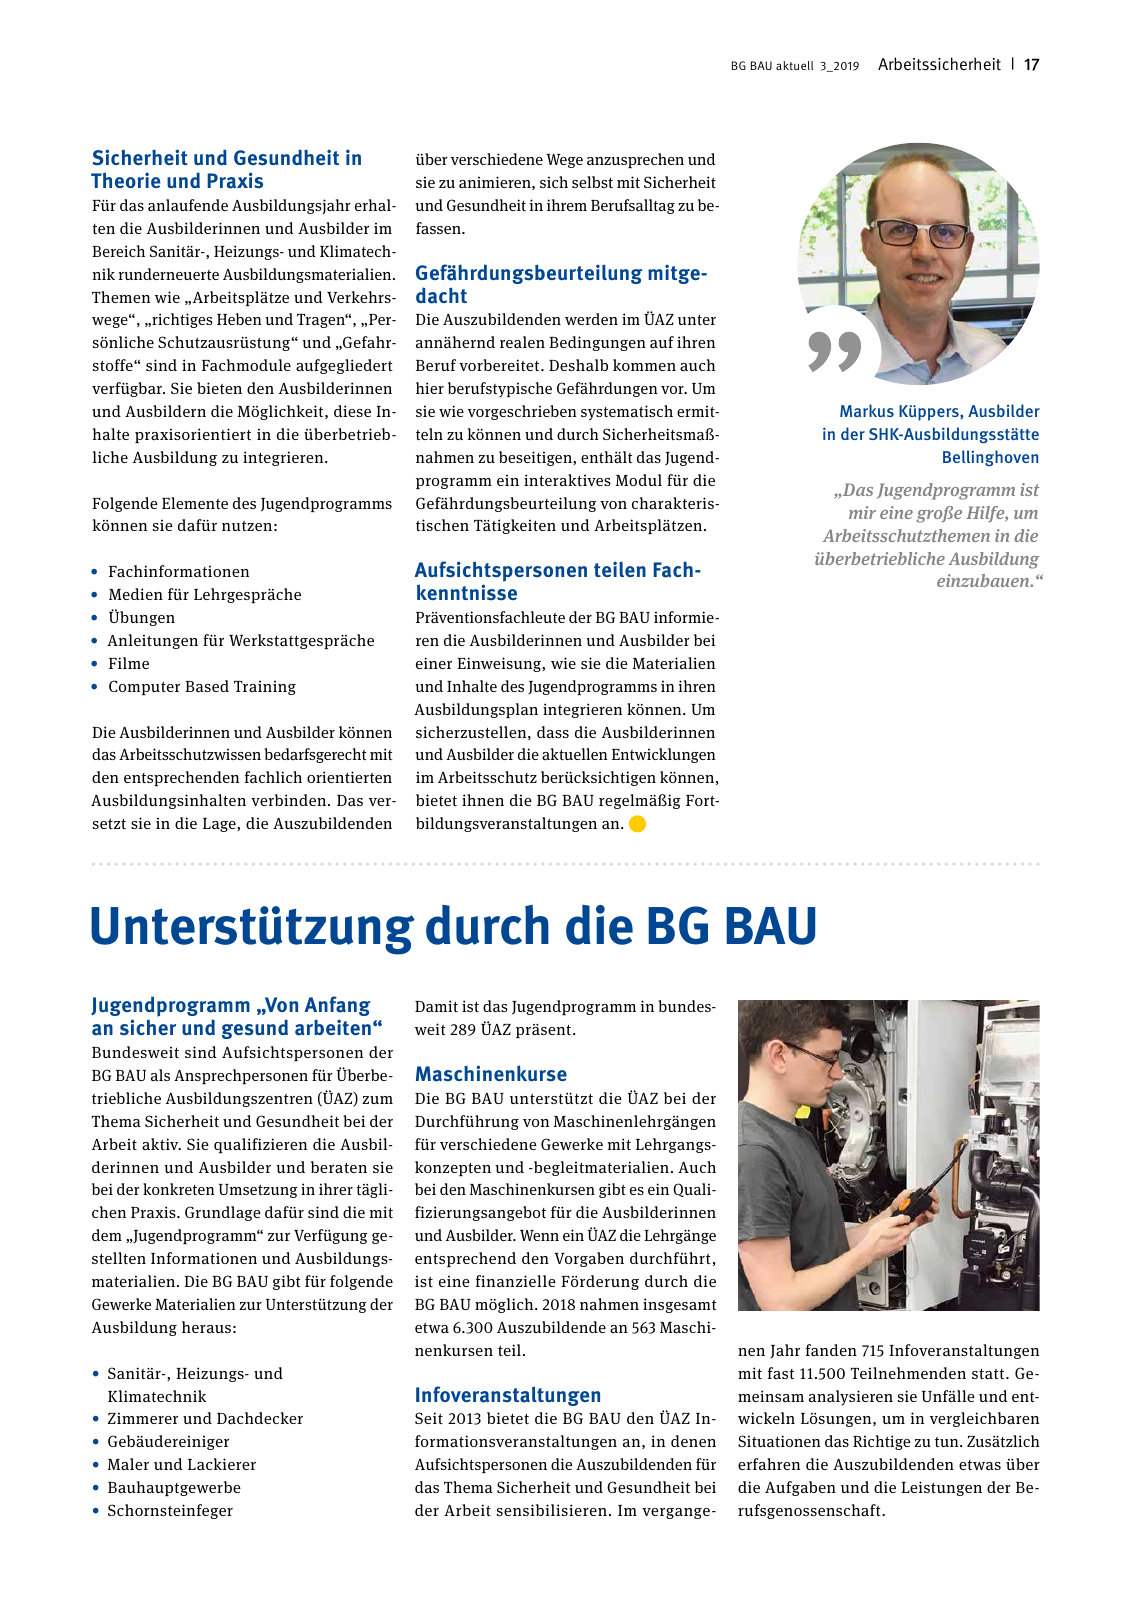 Vorschau BG BAU aktuell 03/2019 Seite 17